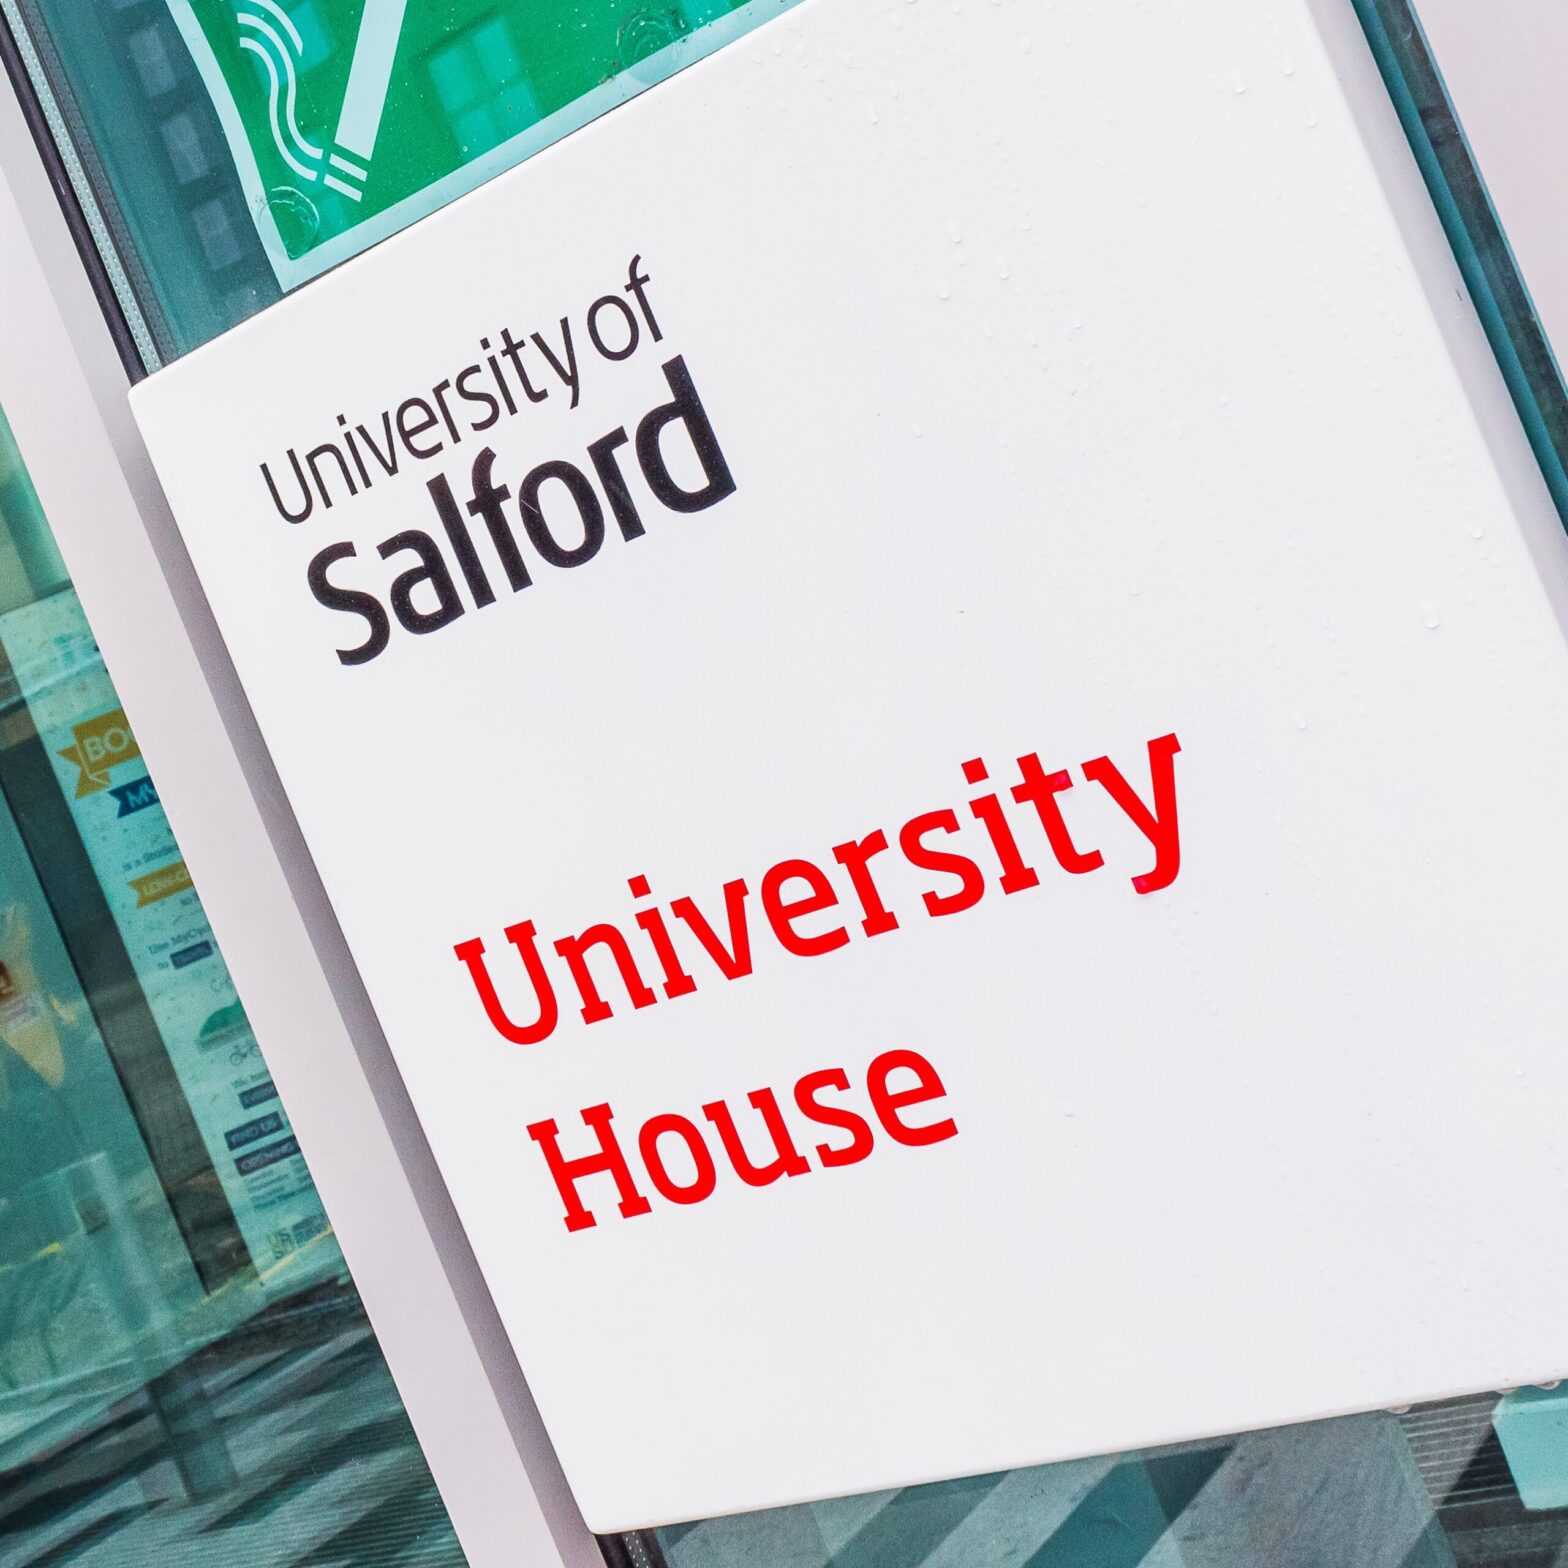 Tamlite University of Salford exterior building signage